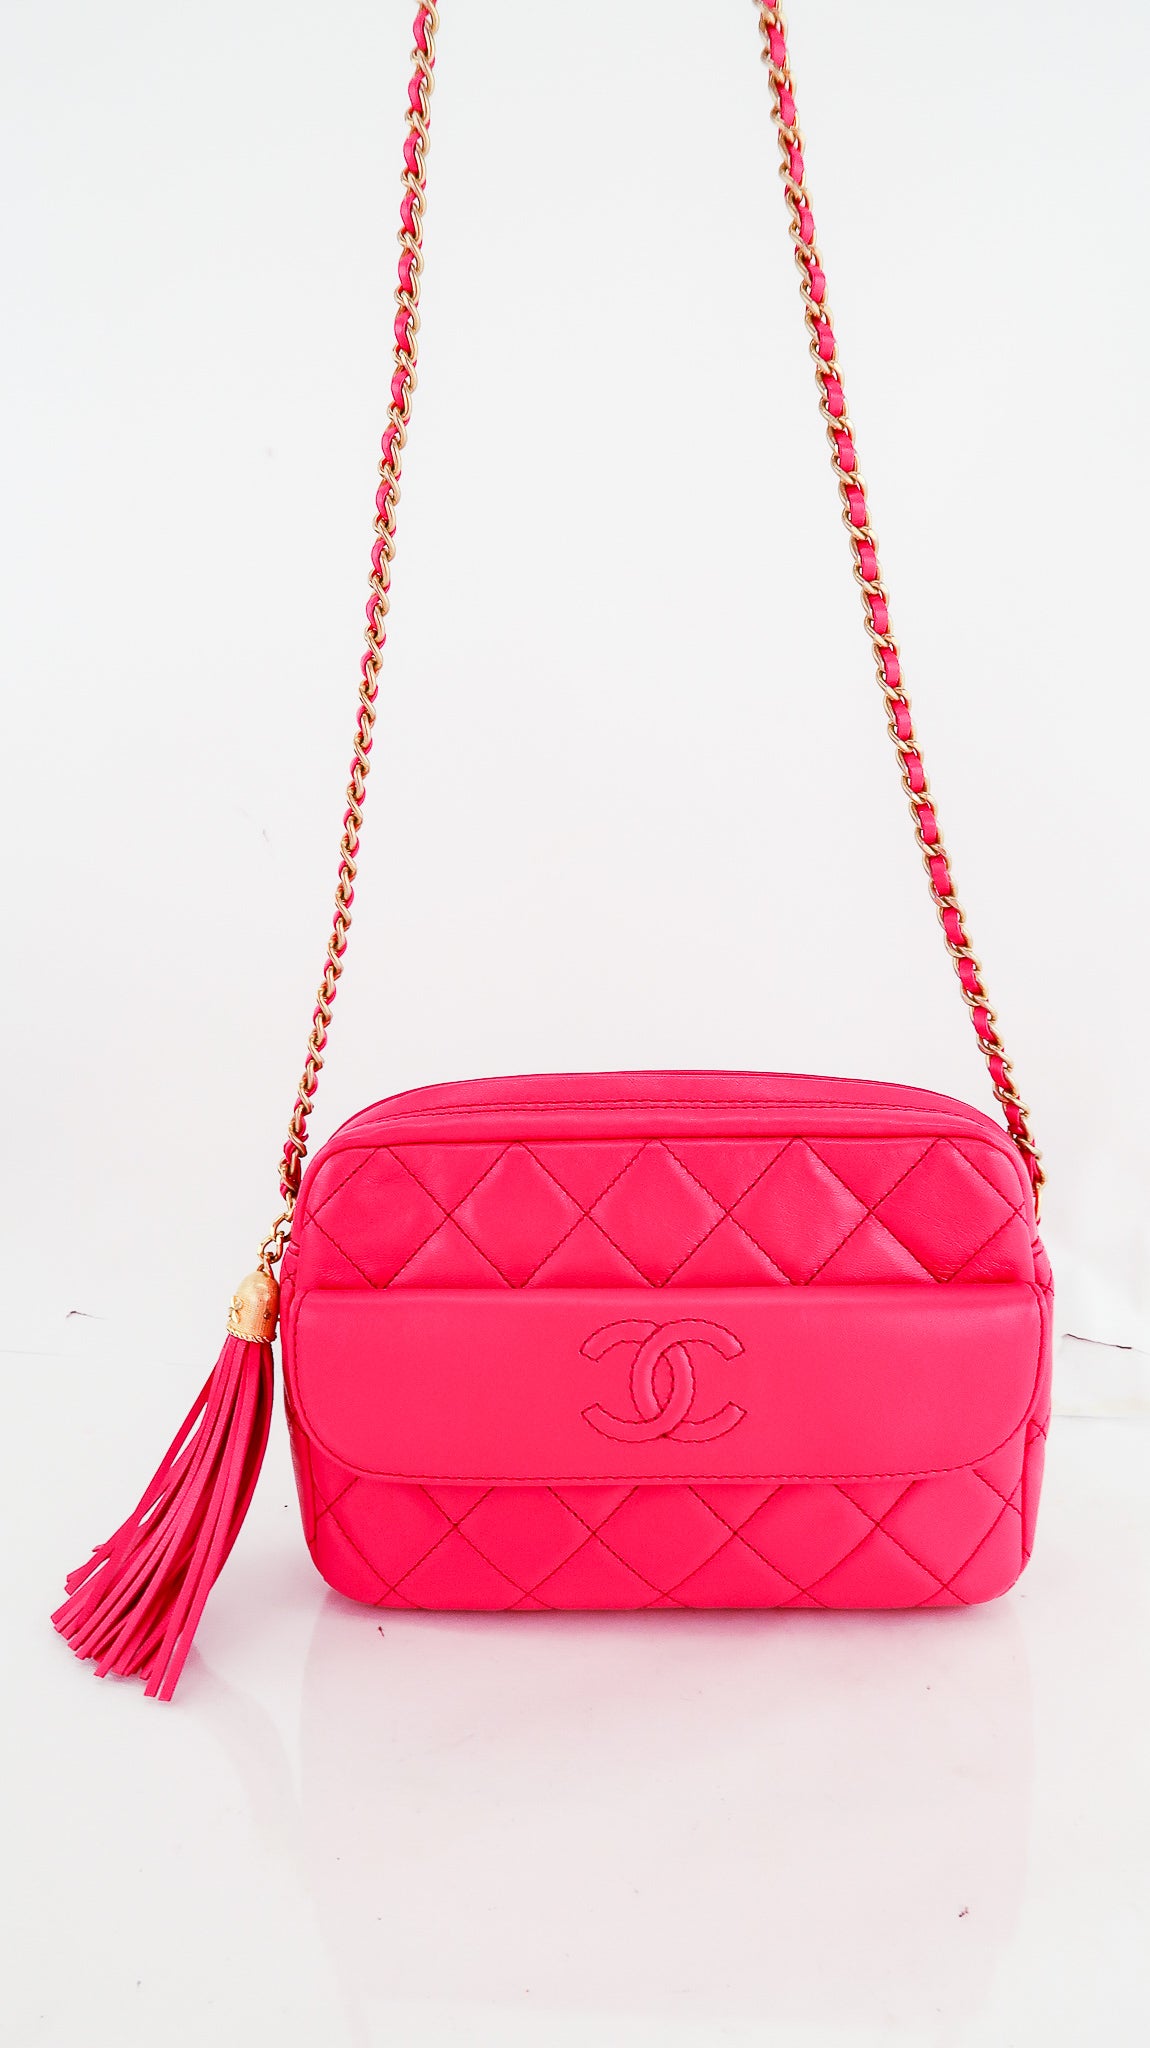 Chanel Camera Bag Pink – DAC